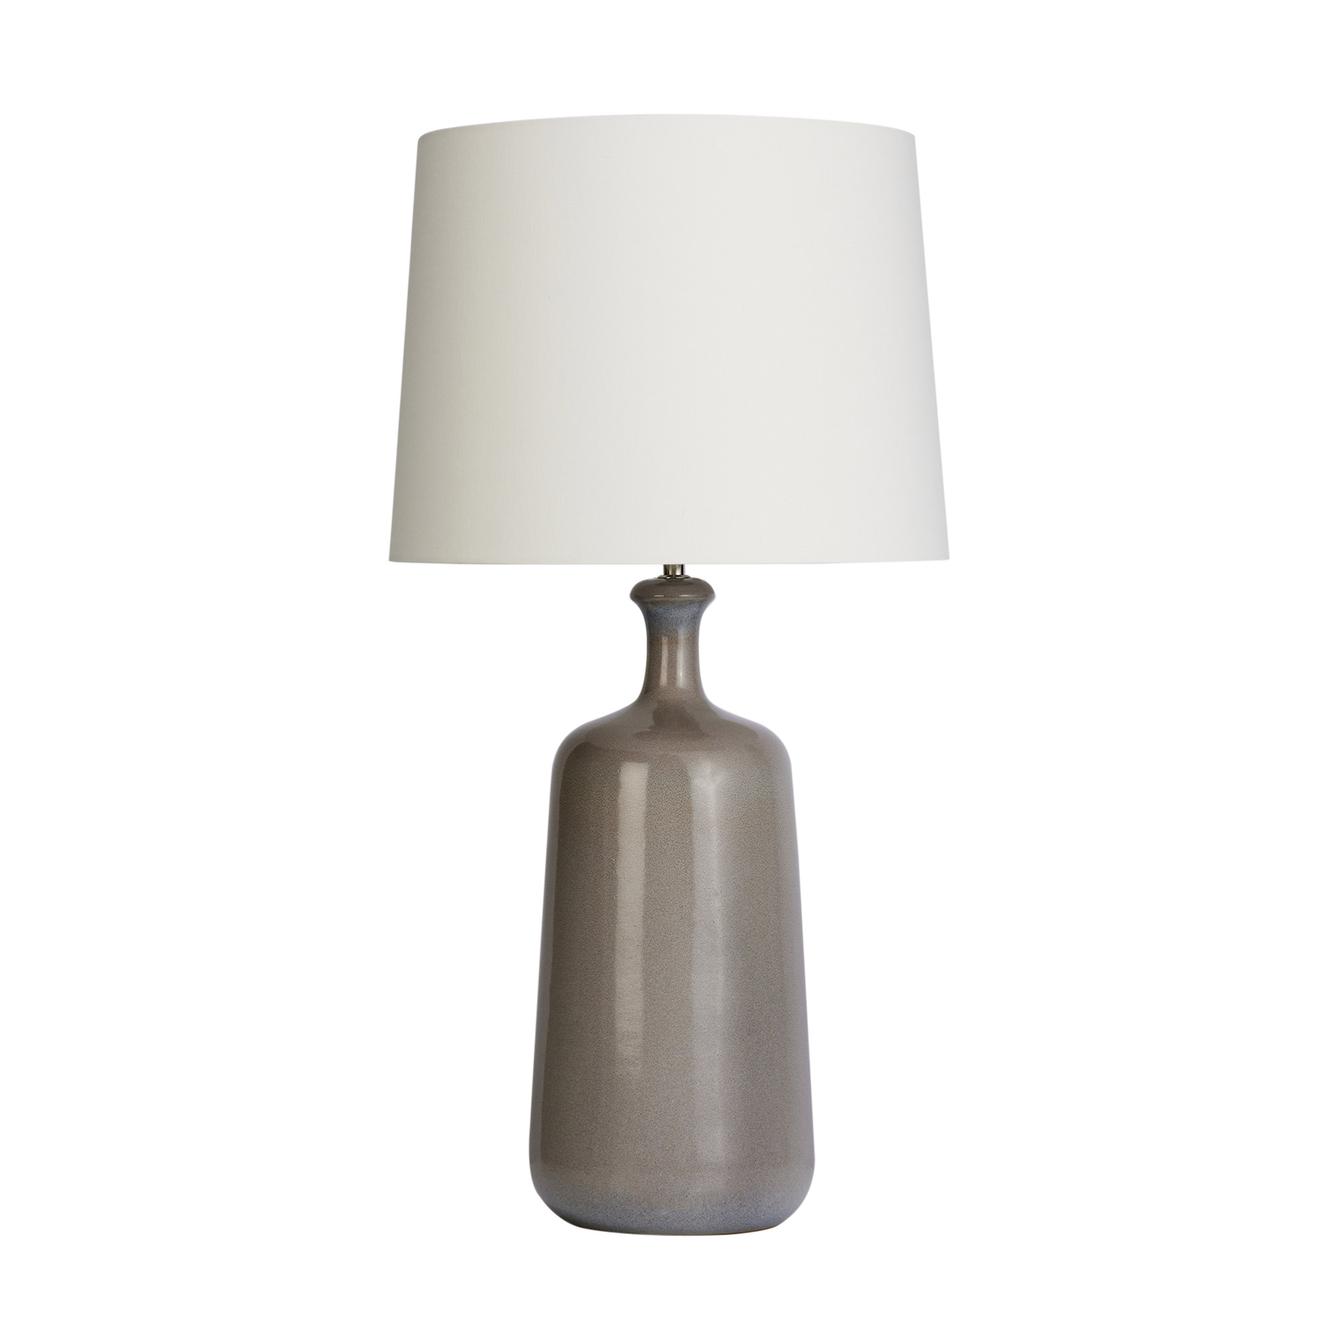 Arielle Table Lamp offers in Bloomingdales